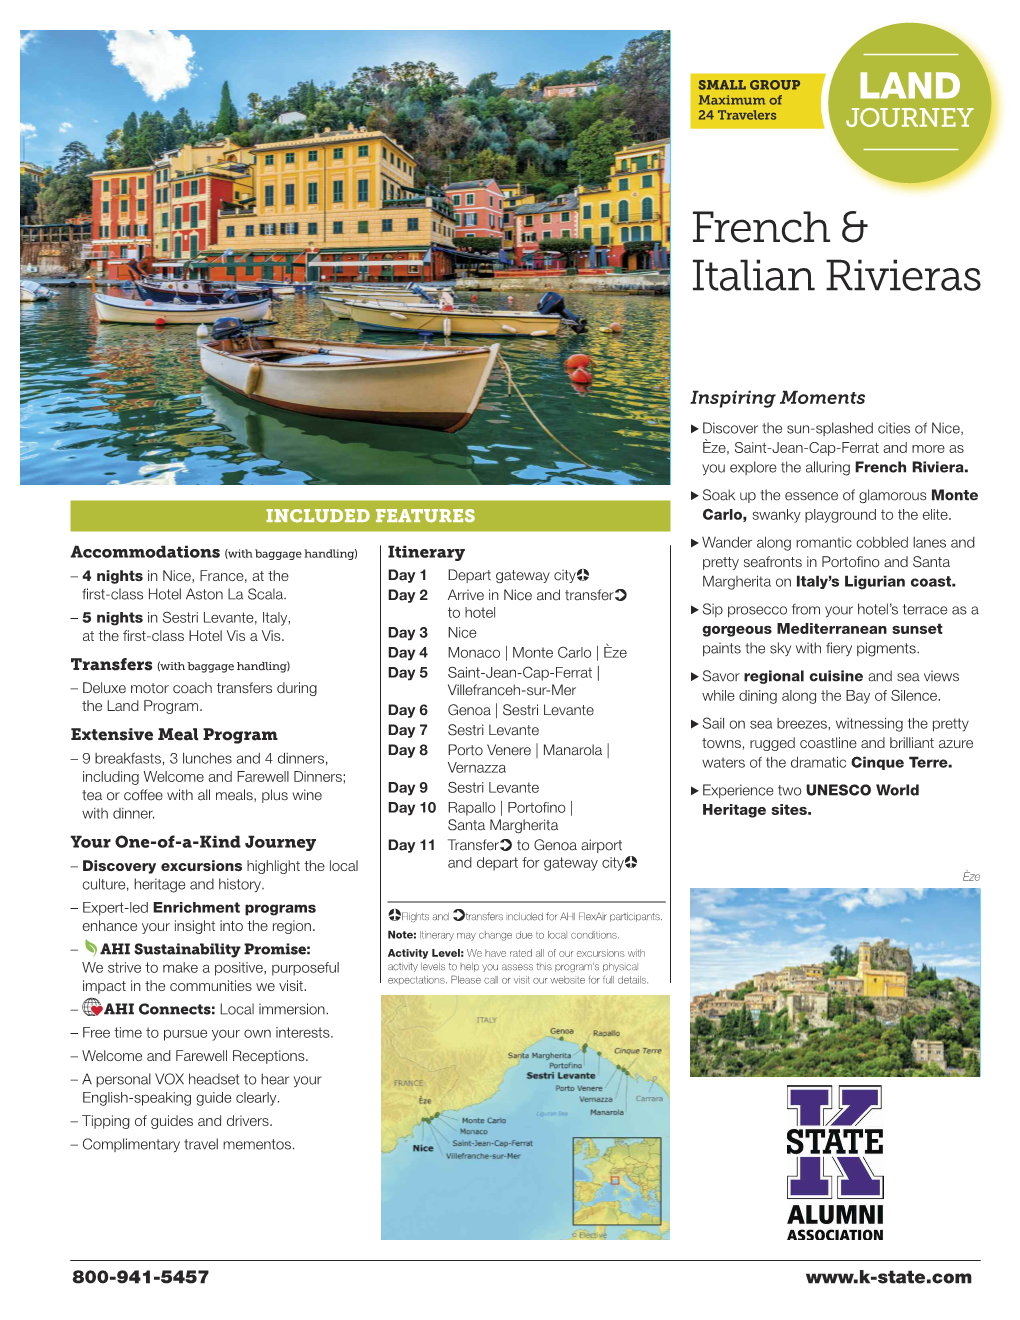 French & Italian Rivieras